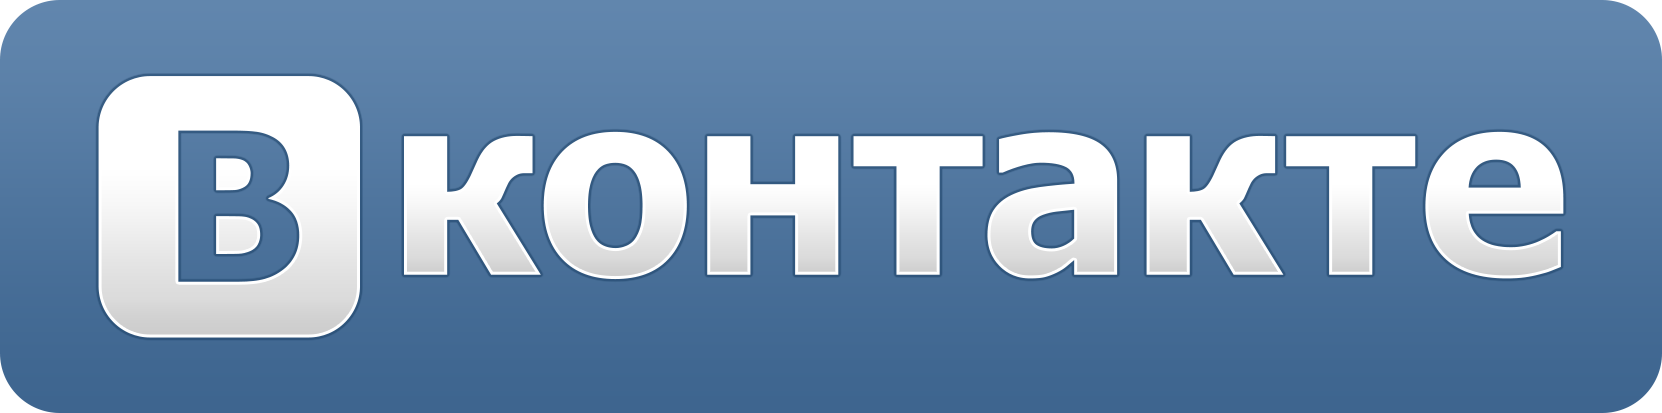 Vkontakte logo PNG image free Download 